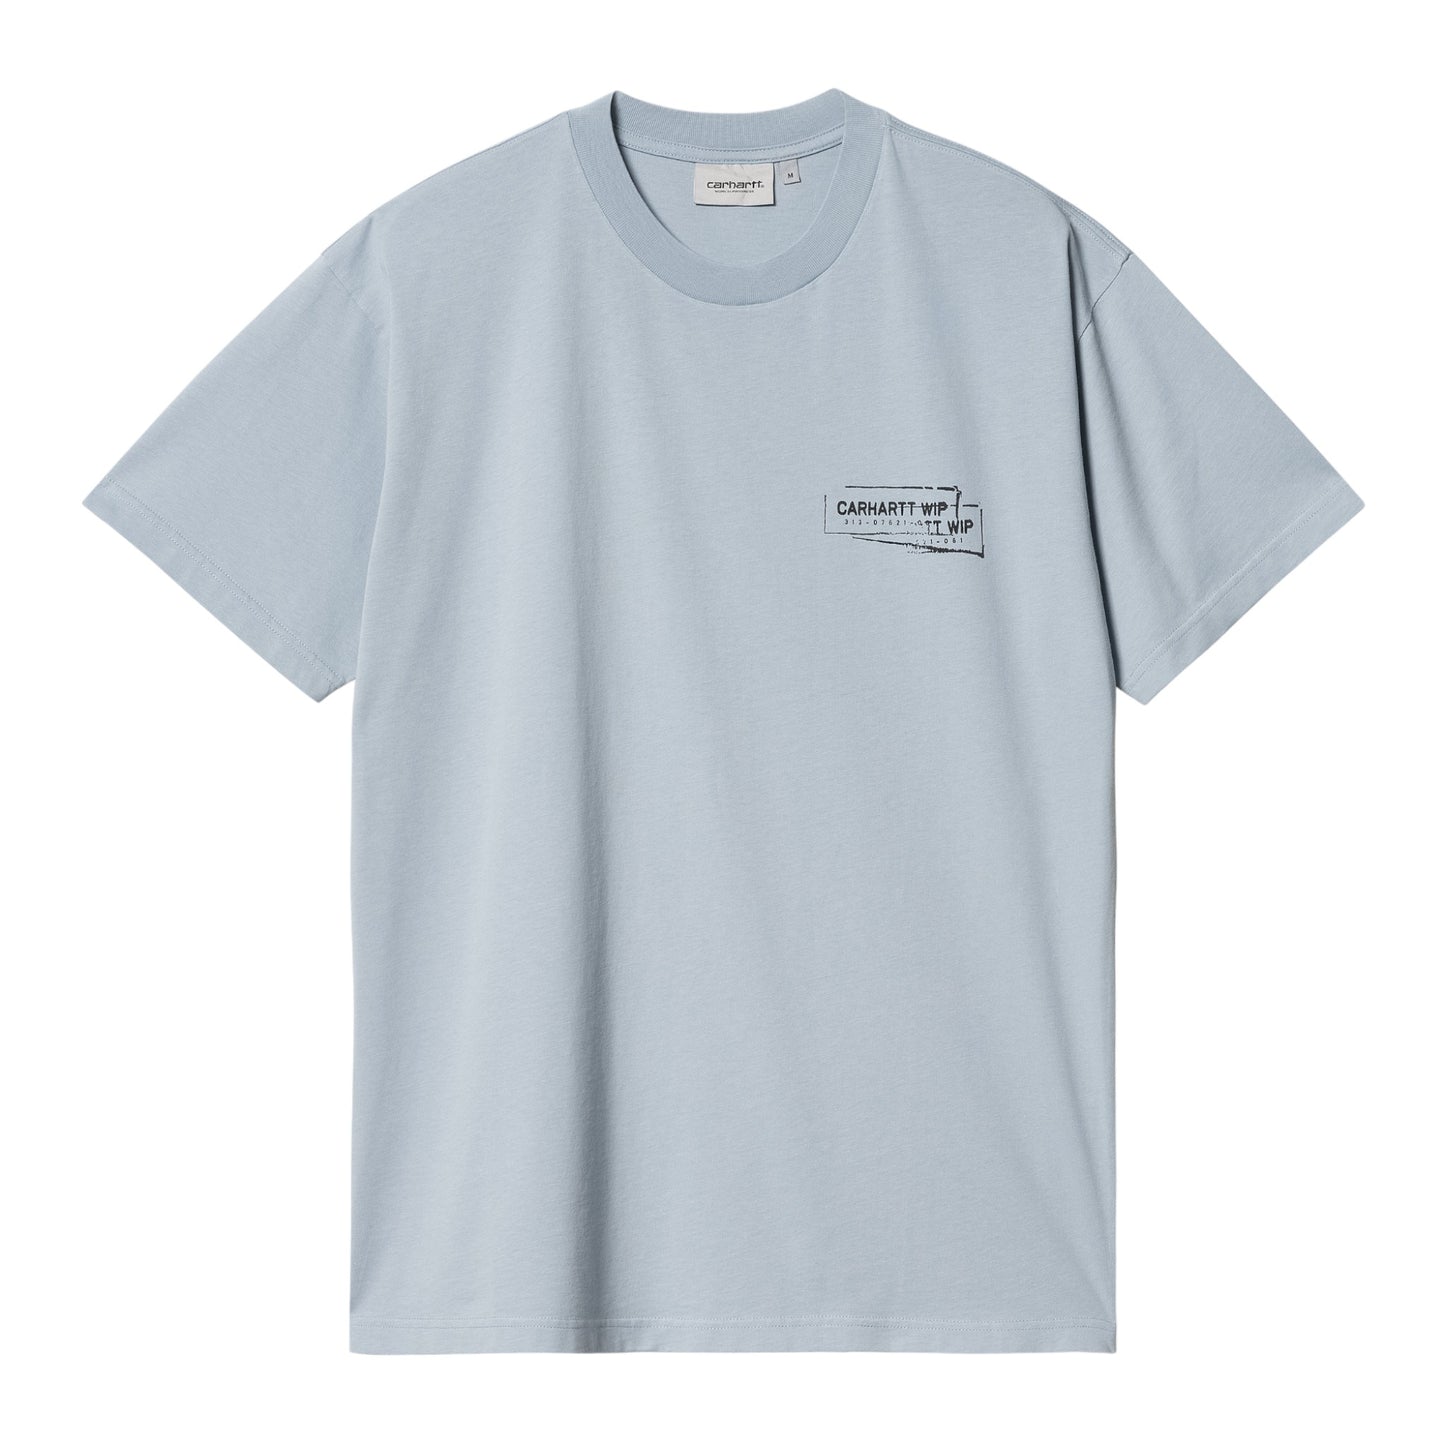 Carhartt Wip Stamp T-Shirt - Misty Sky / Black stone washed